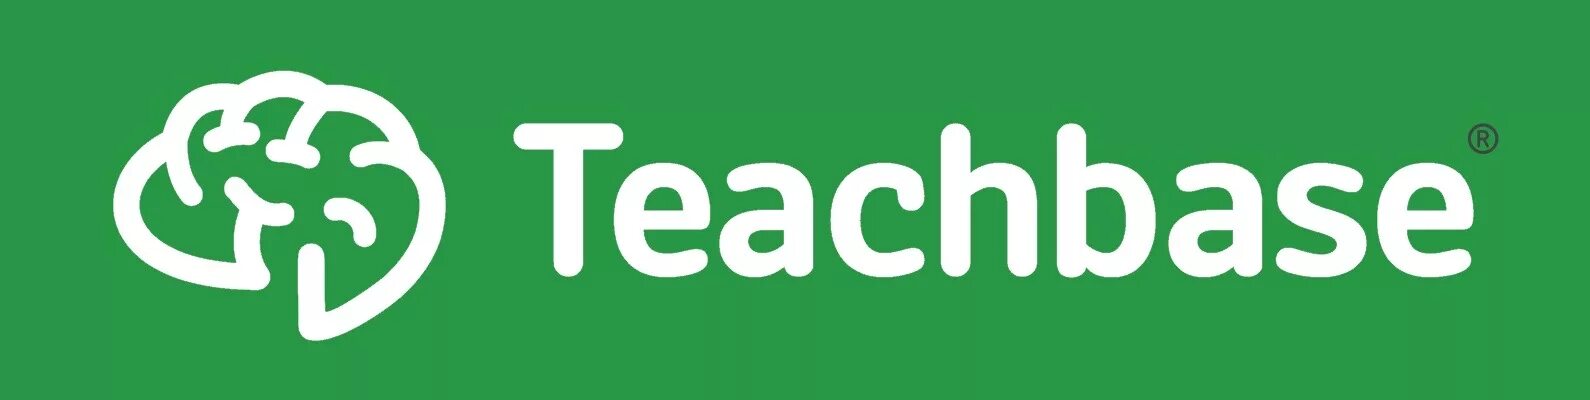 Go teachbase ru для сфр. Тичбейс логотип. Лого компании Teachbase. Тичбейс личный кабинет. Тейч бейс.